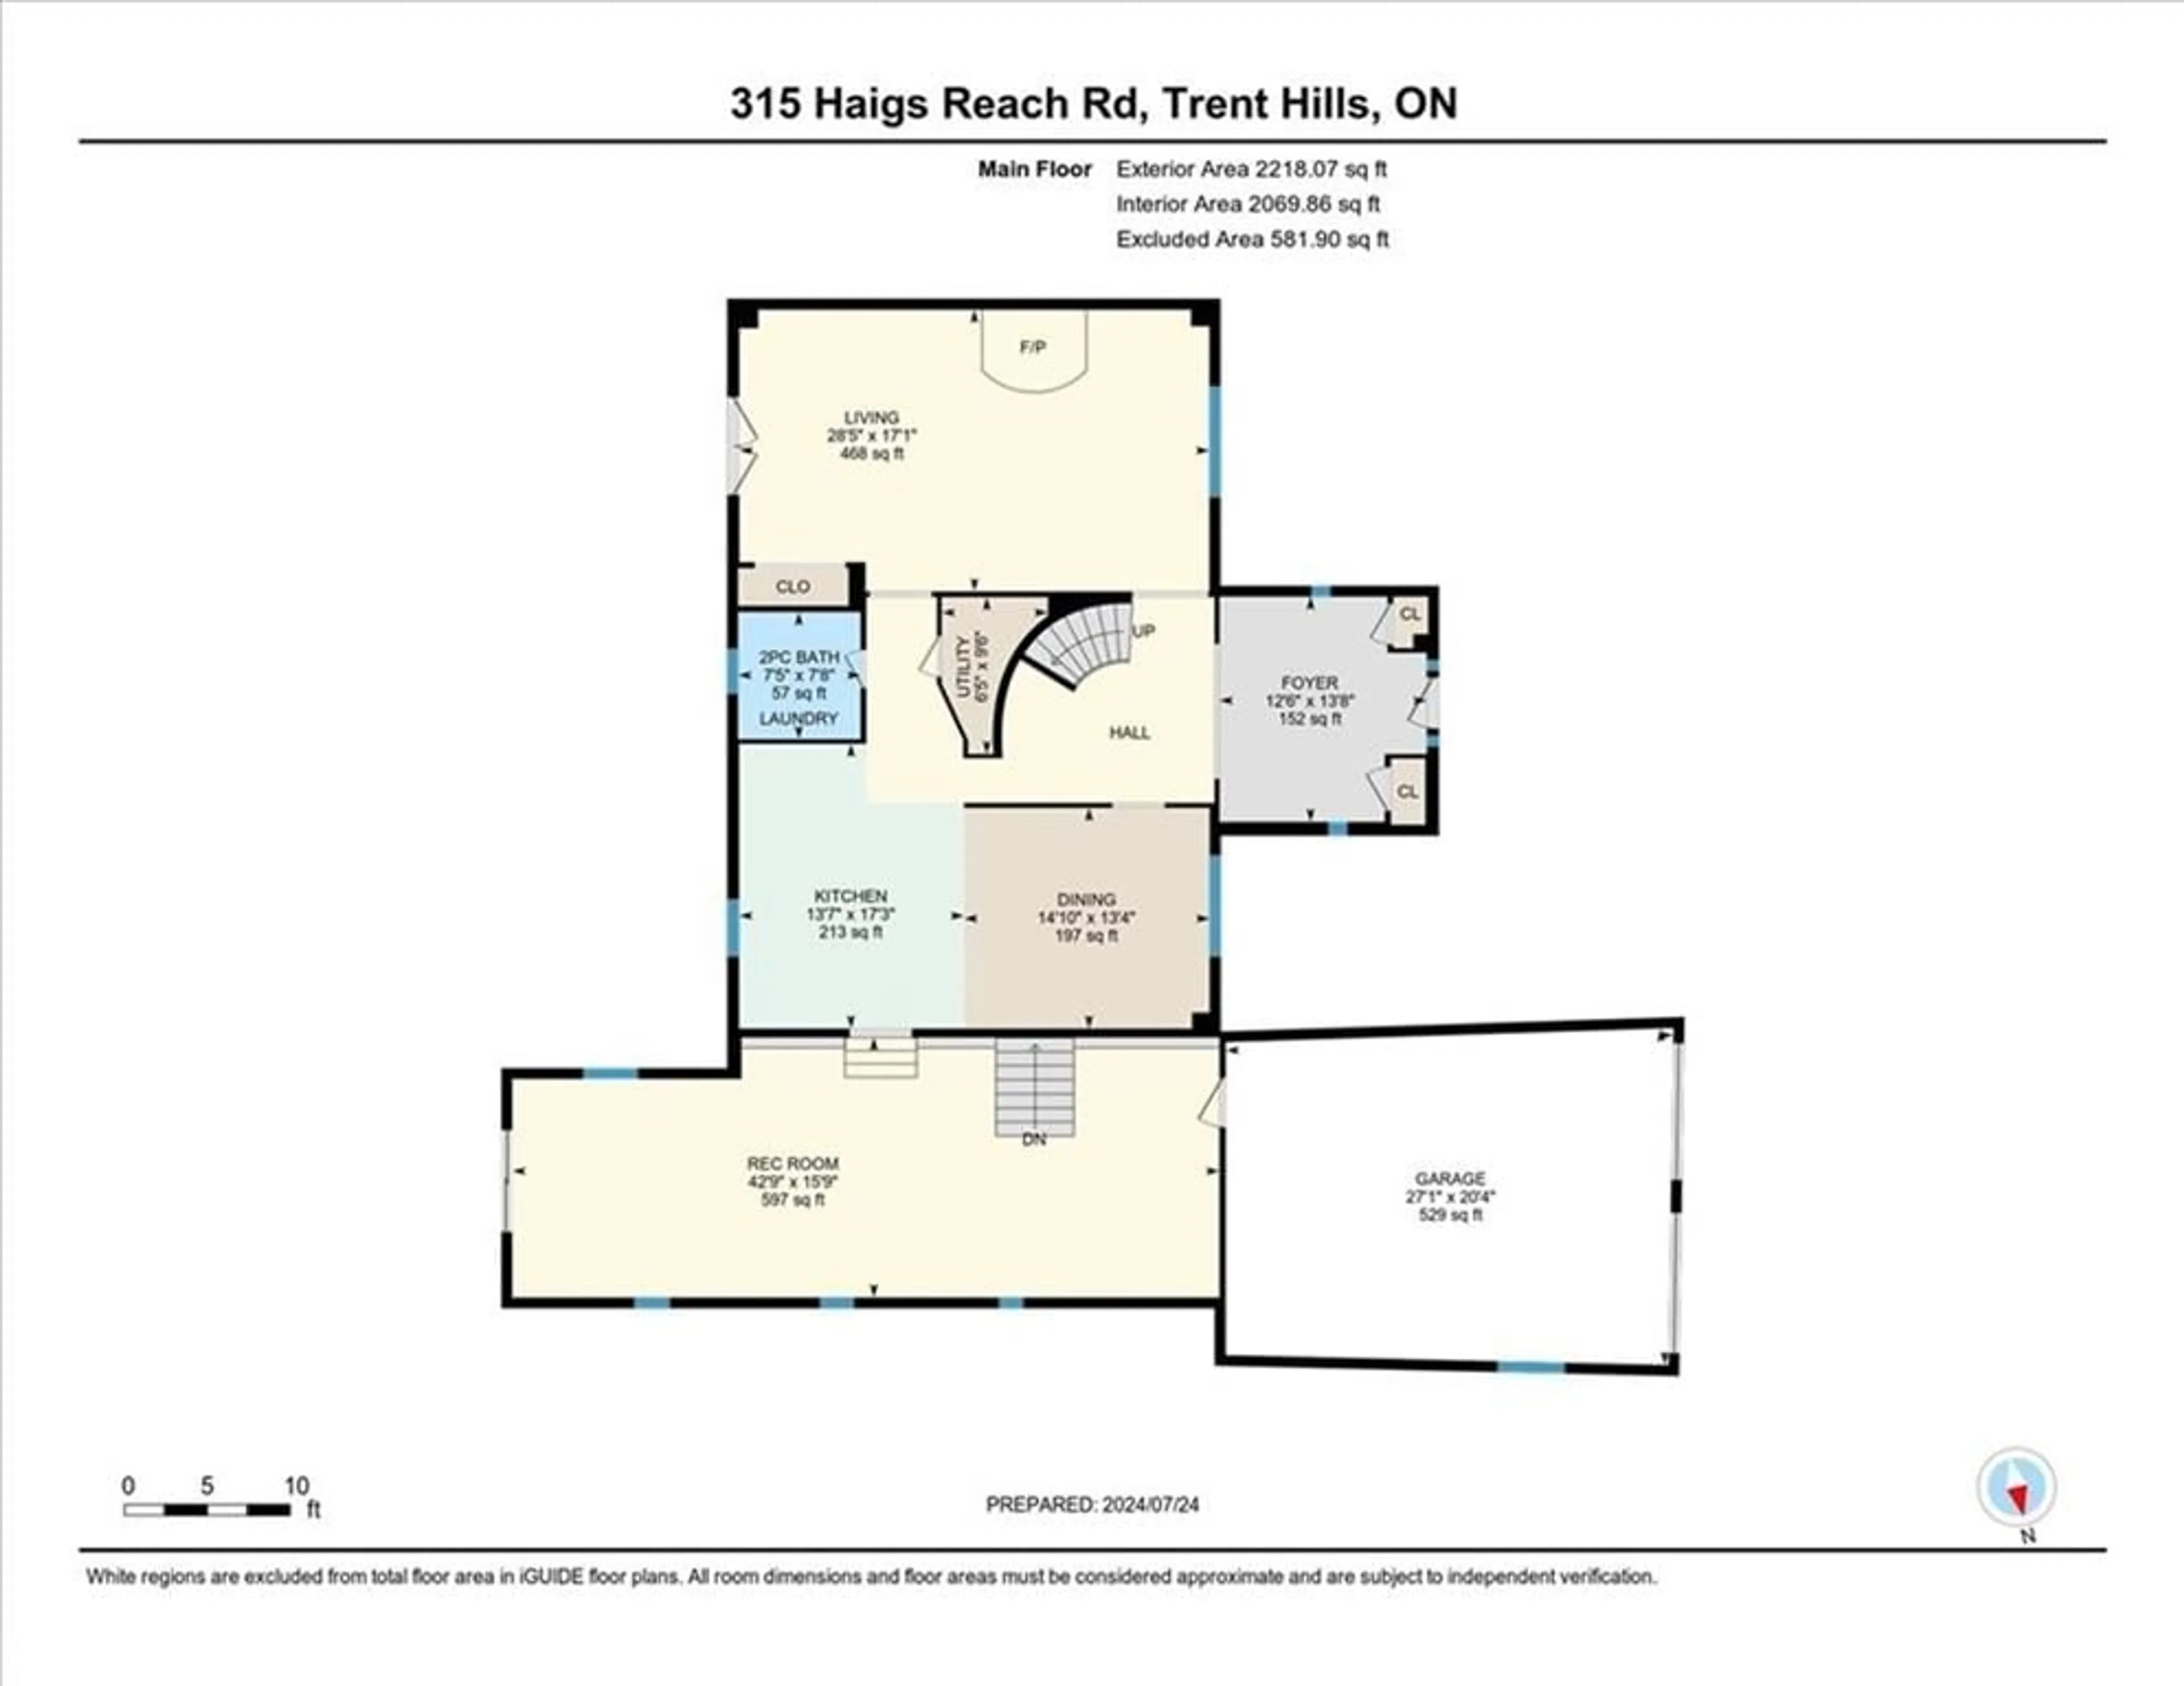 Floor plan for 315 Haigs Reach Rd, Trent Hills Ontario K0L 1L0